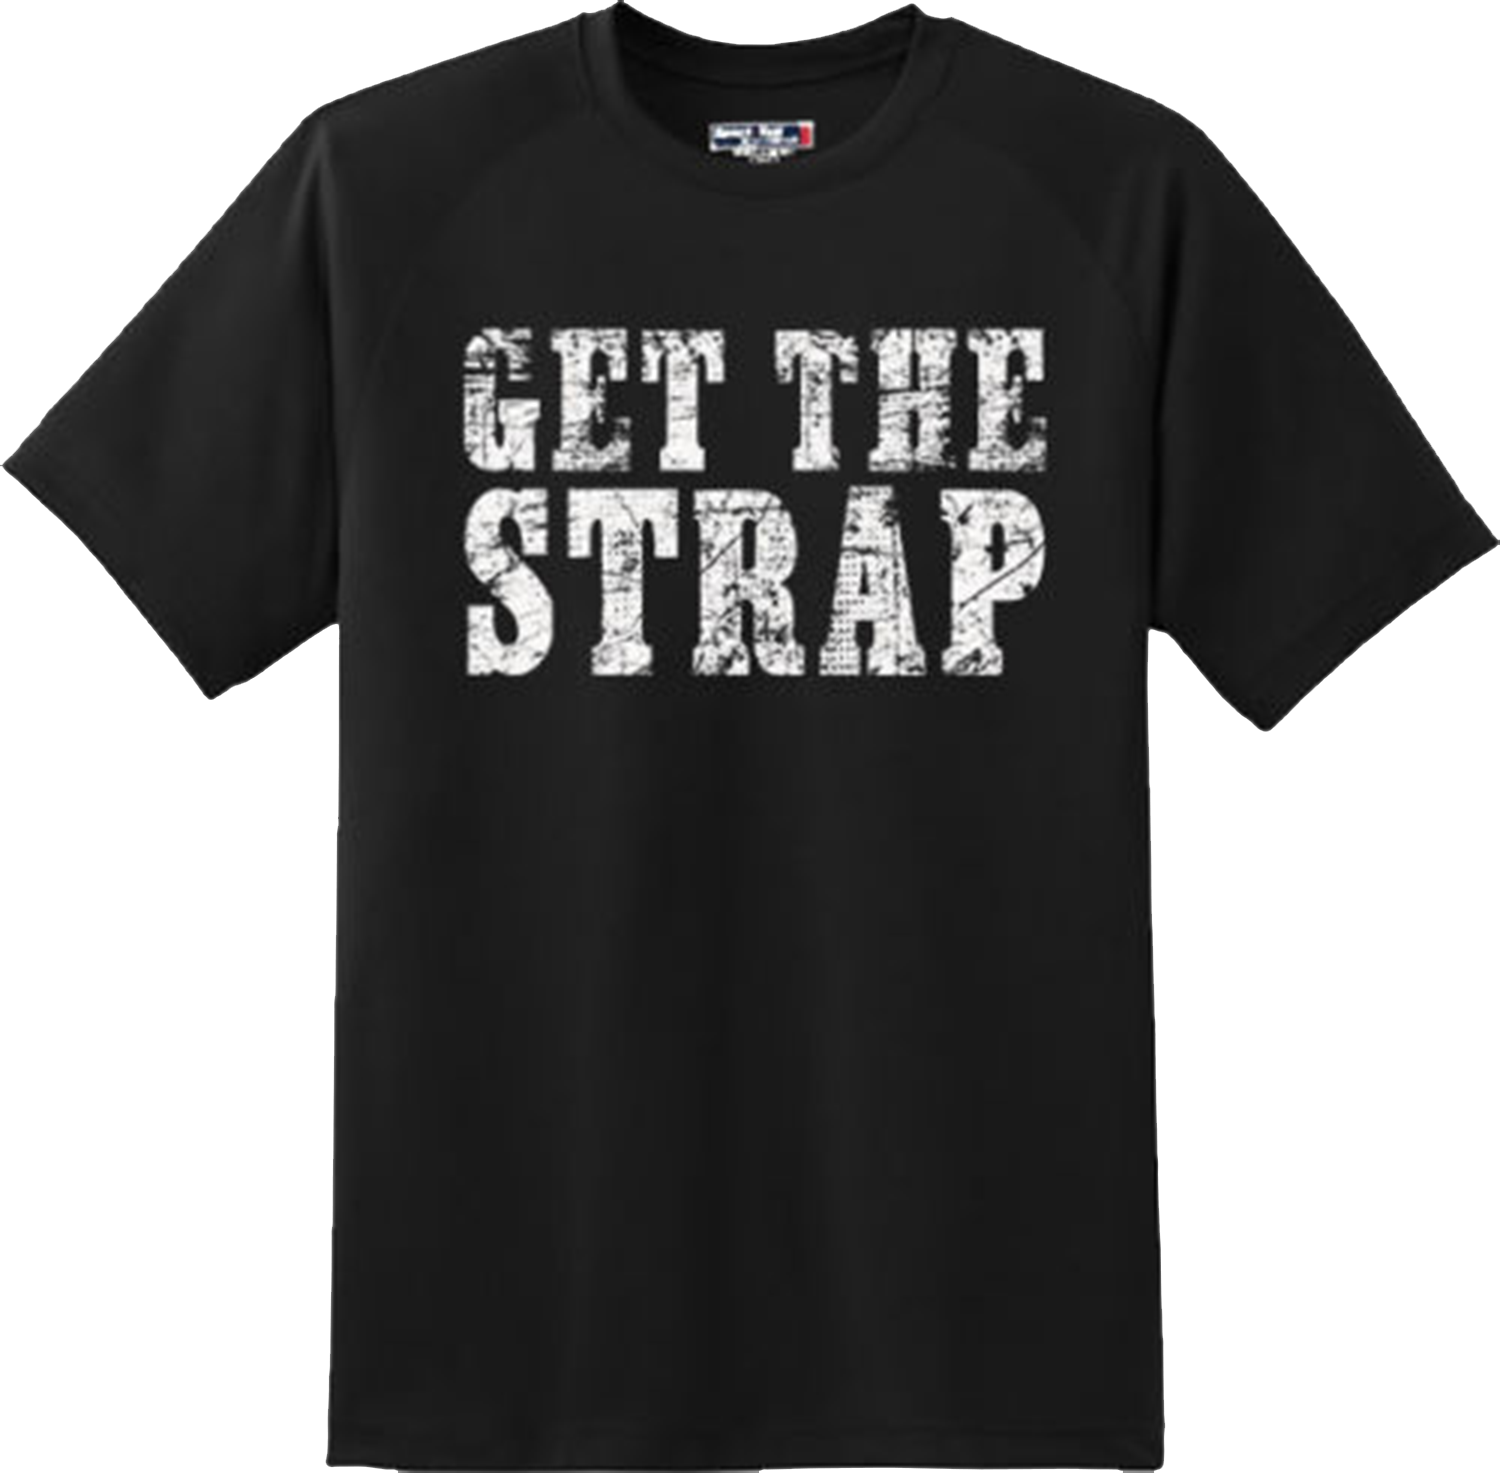 Get the Strap Hip Hop Raper G-Unit Supreme box Cool T Shirt New Graphic Tee